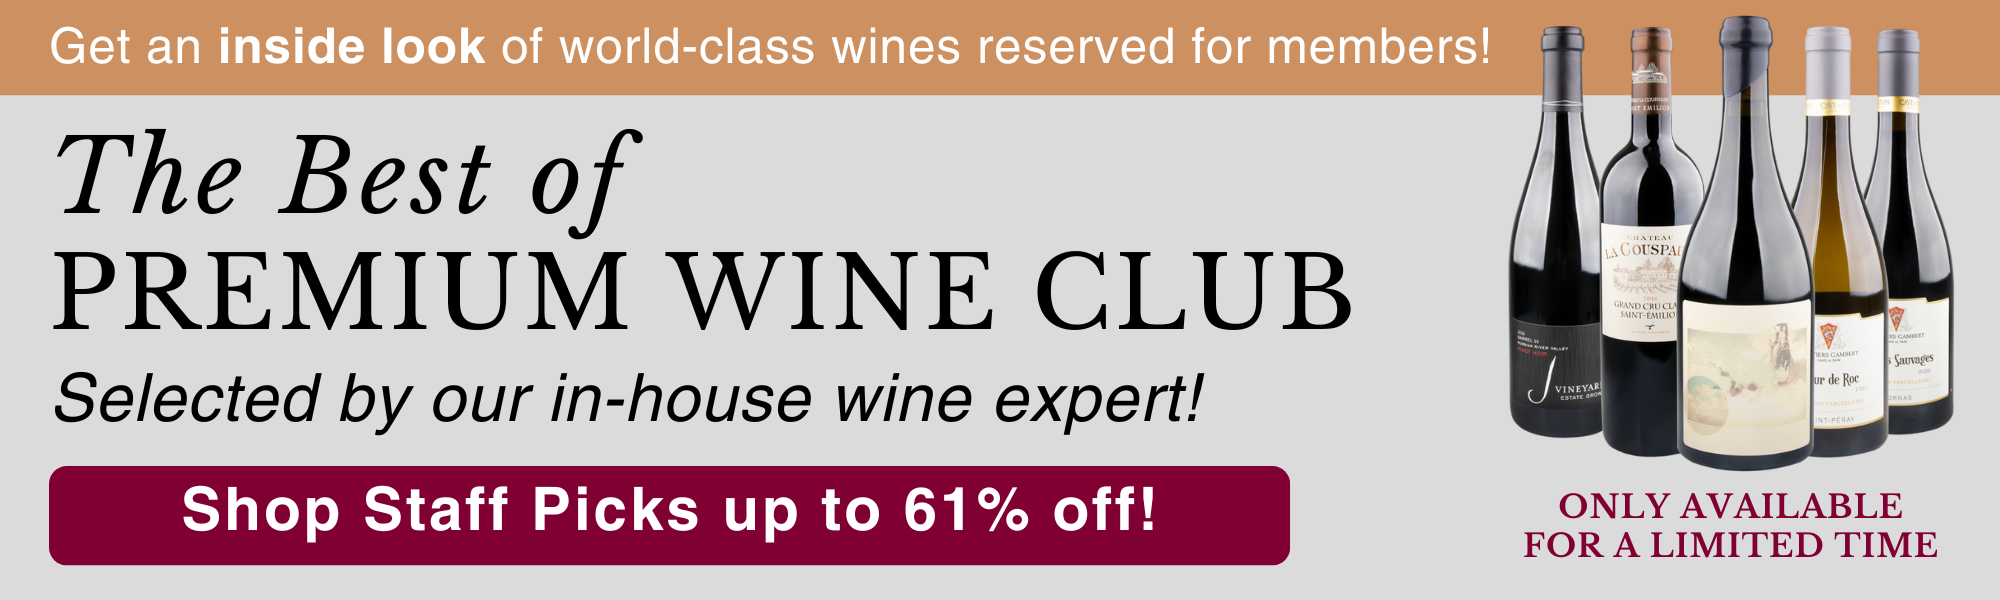 Ed's April Picks: Best of Premium Wine Club